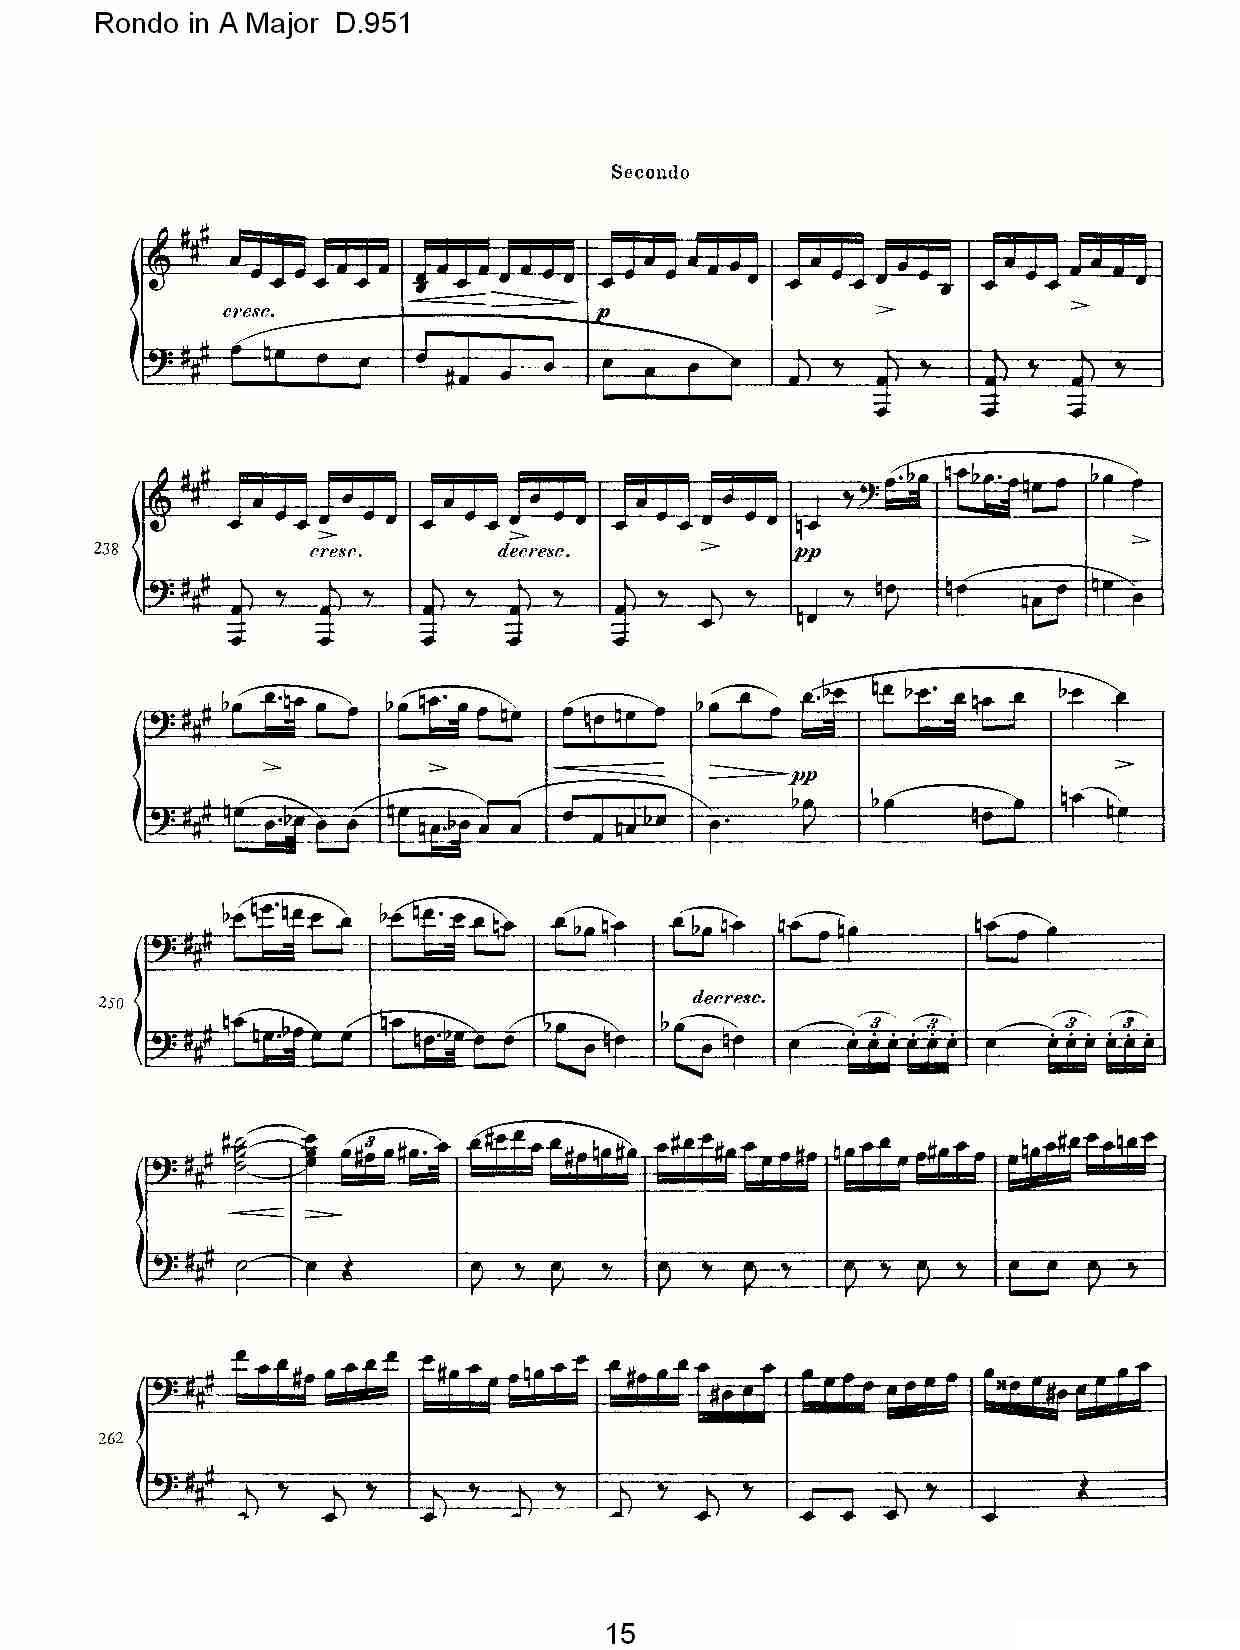 Rondo in A Major D.951（Ａ大调回旋曲D.951）钢琴曲谱（图15）